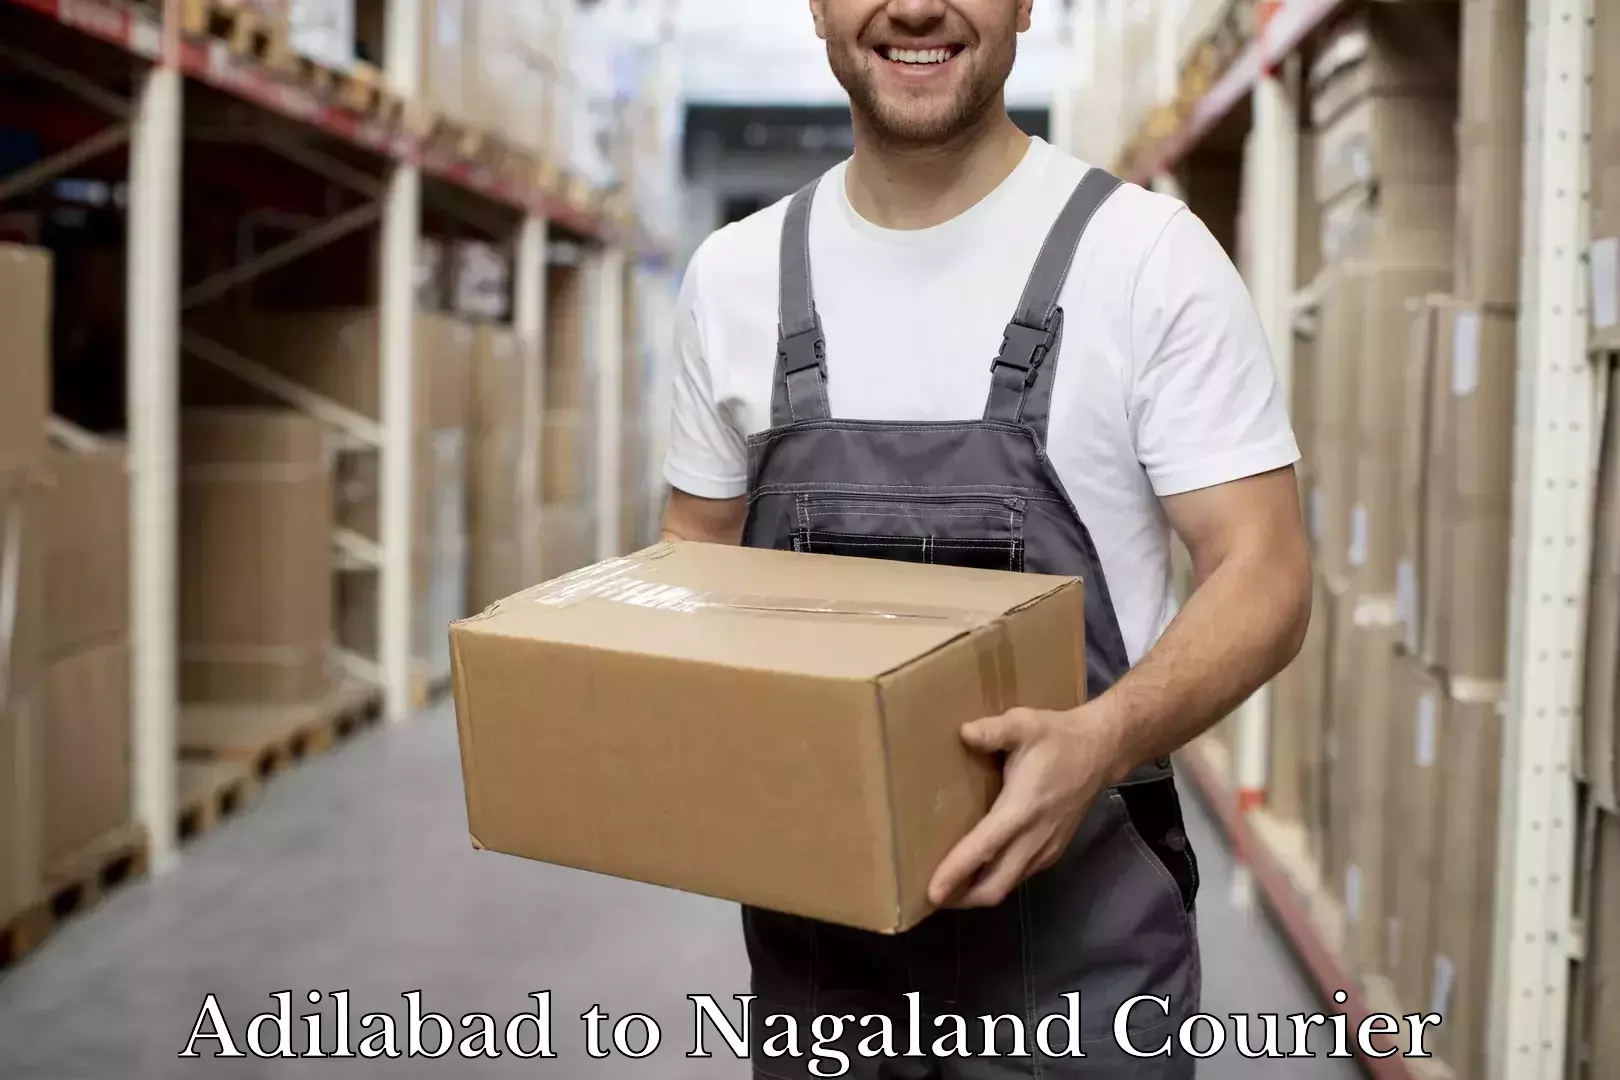 Luggage delivery app Adilabad to Nagaland